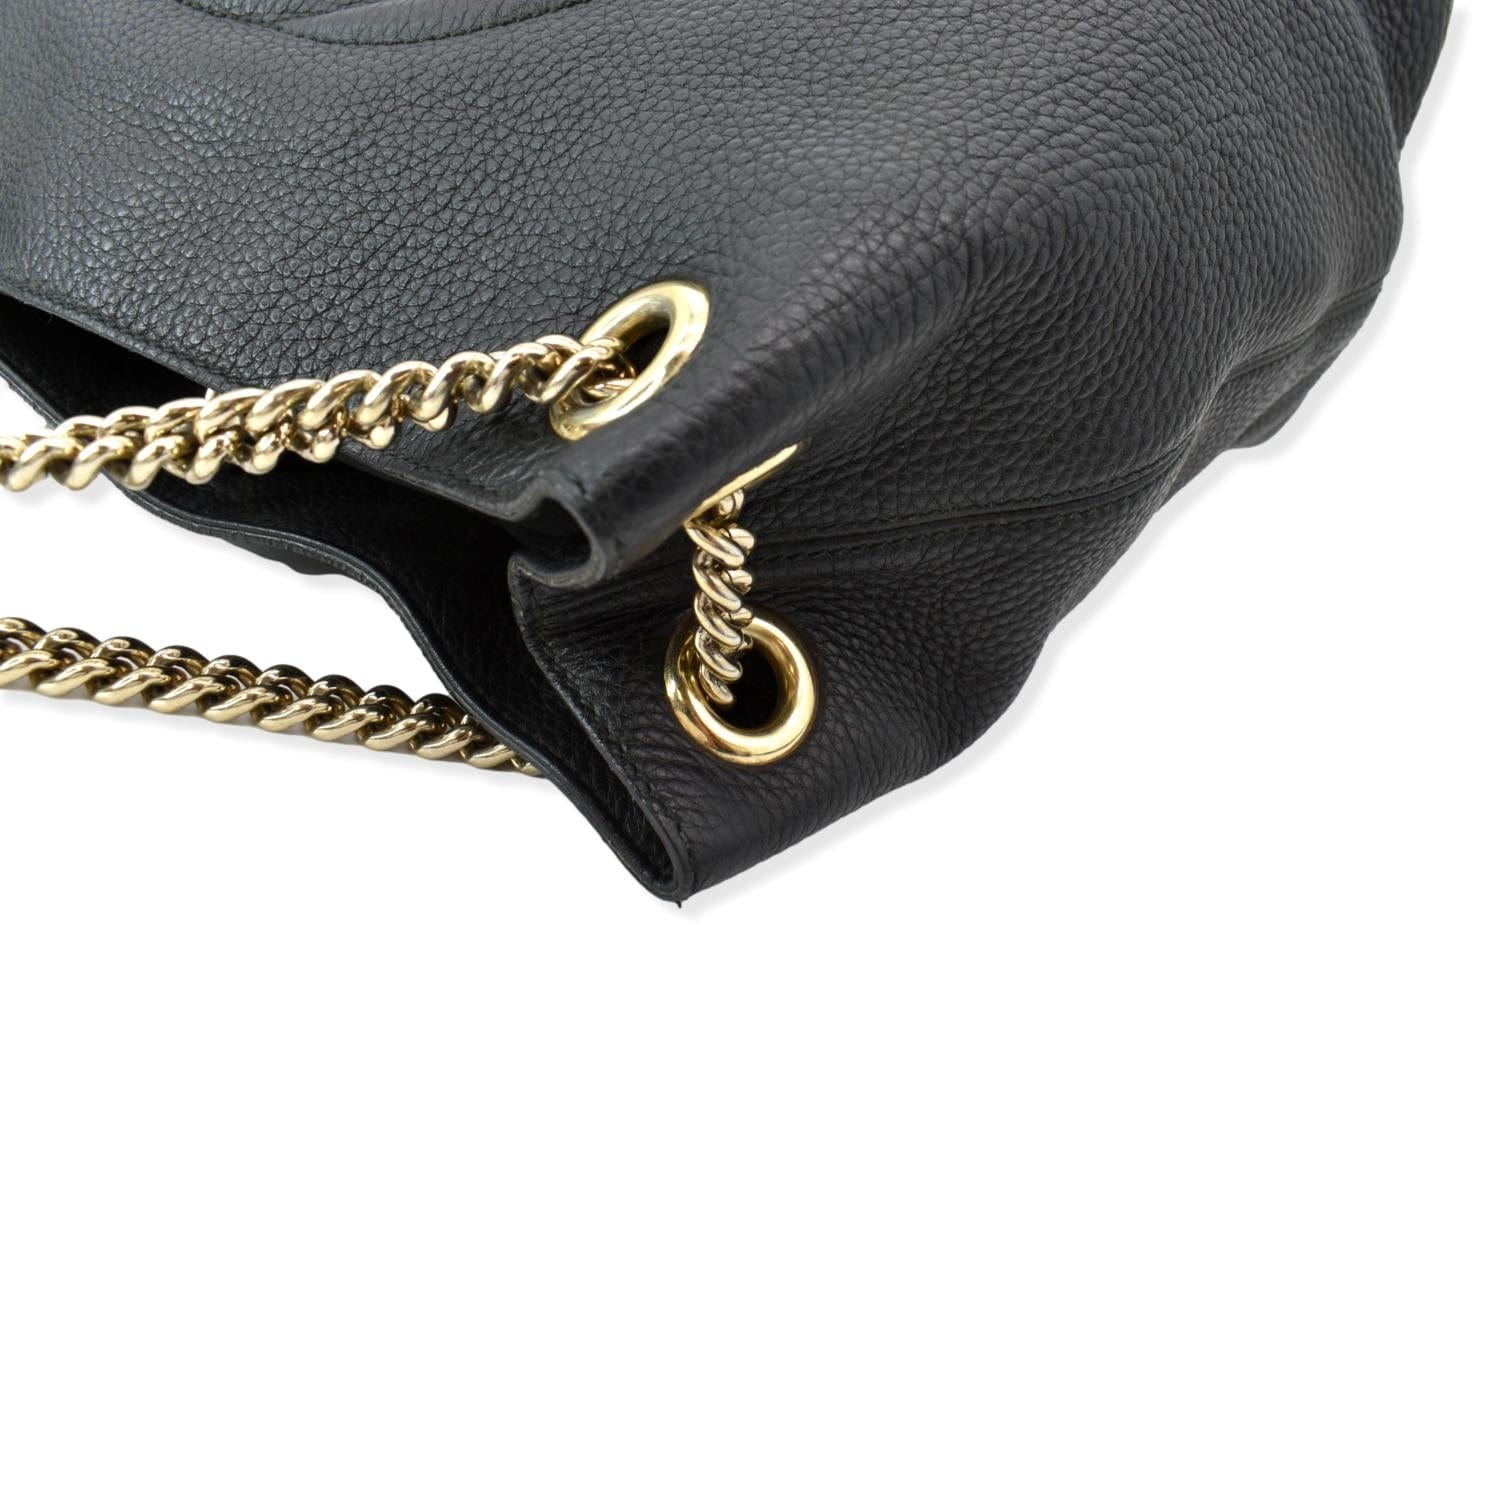  Gucci Soho Medium Black Double Leather Chain Shoulder